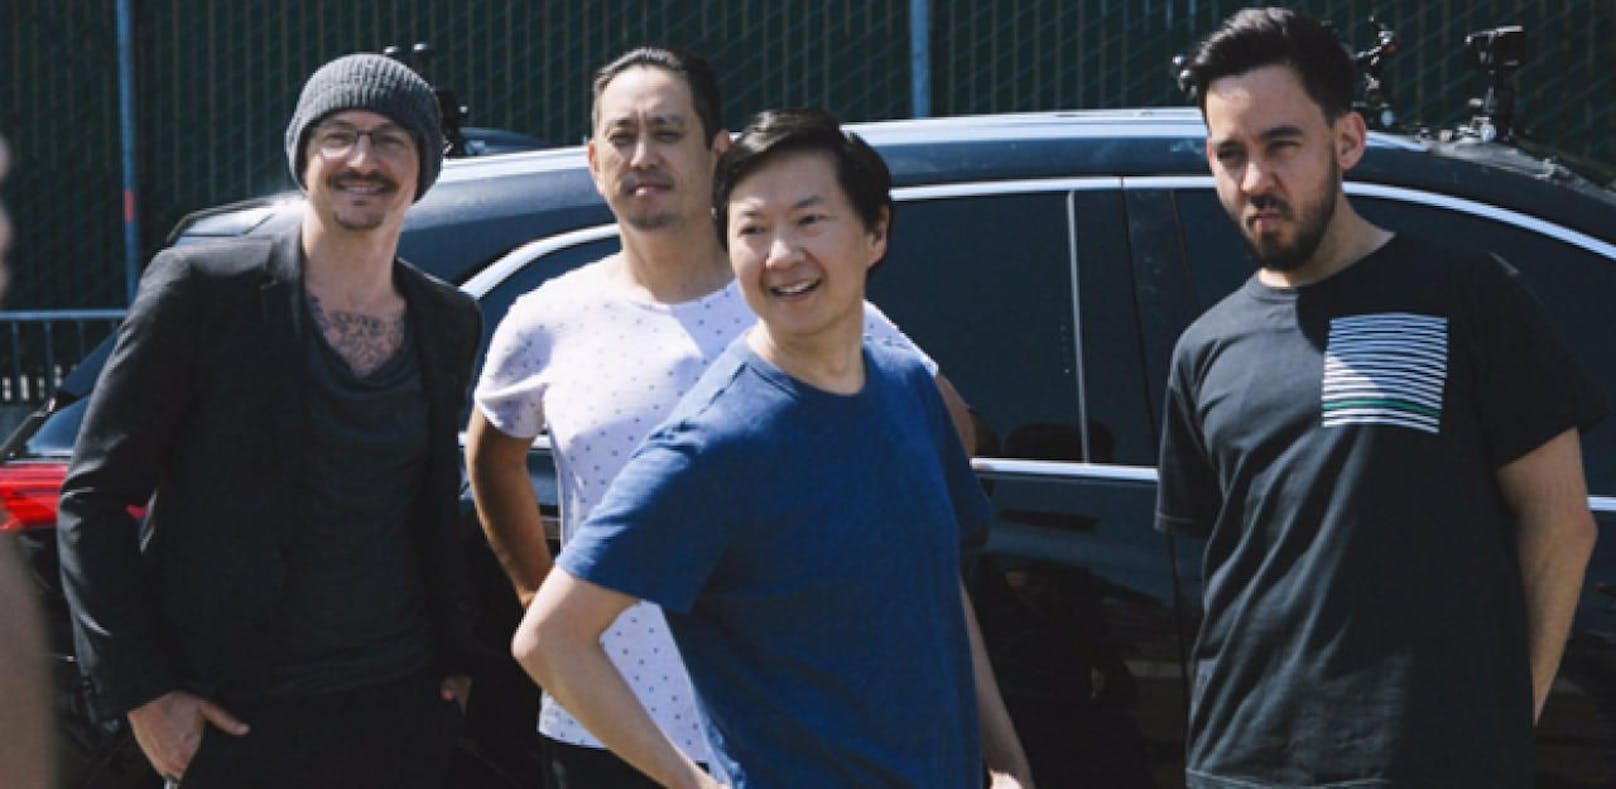 Linkin Park gaben Auftritt bei "Carpool Karaoke"